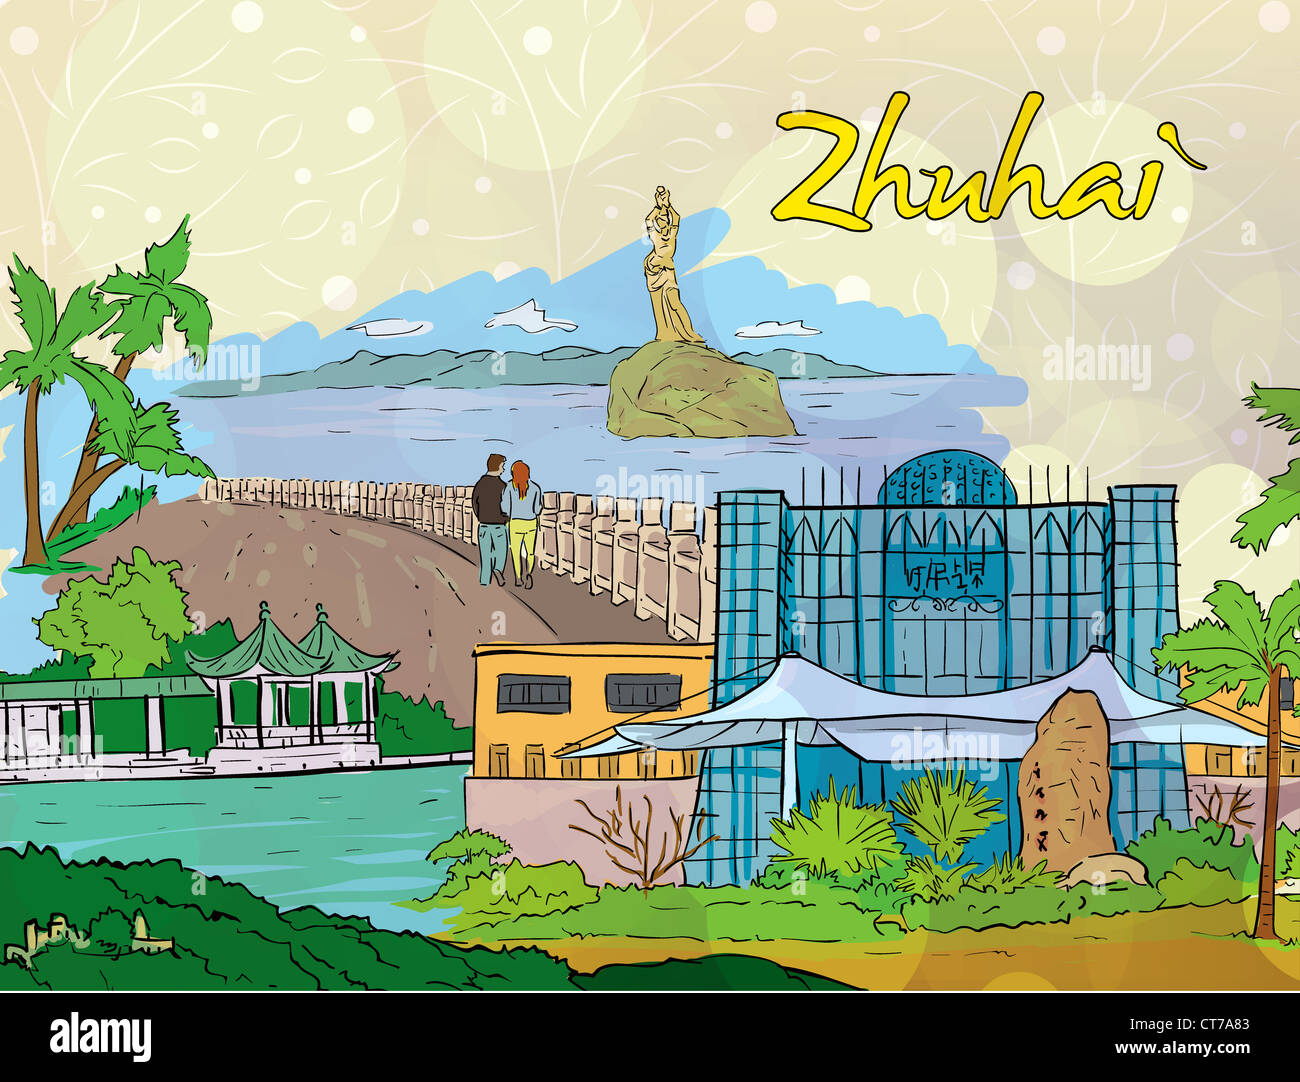 zhuhai doodles vector illustration Stock Photo